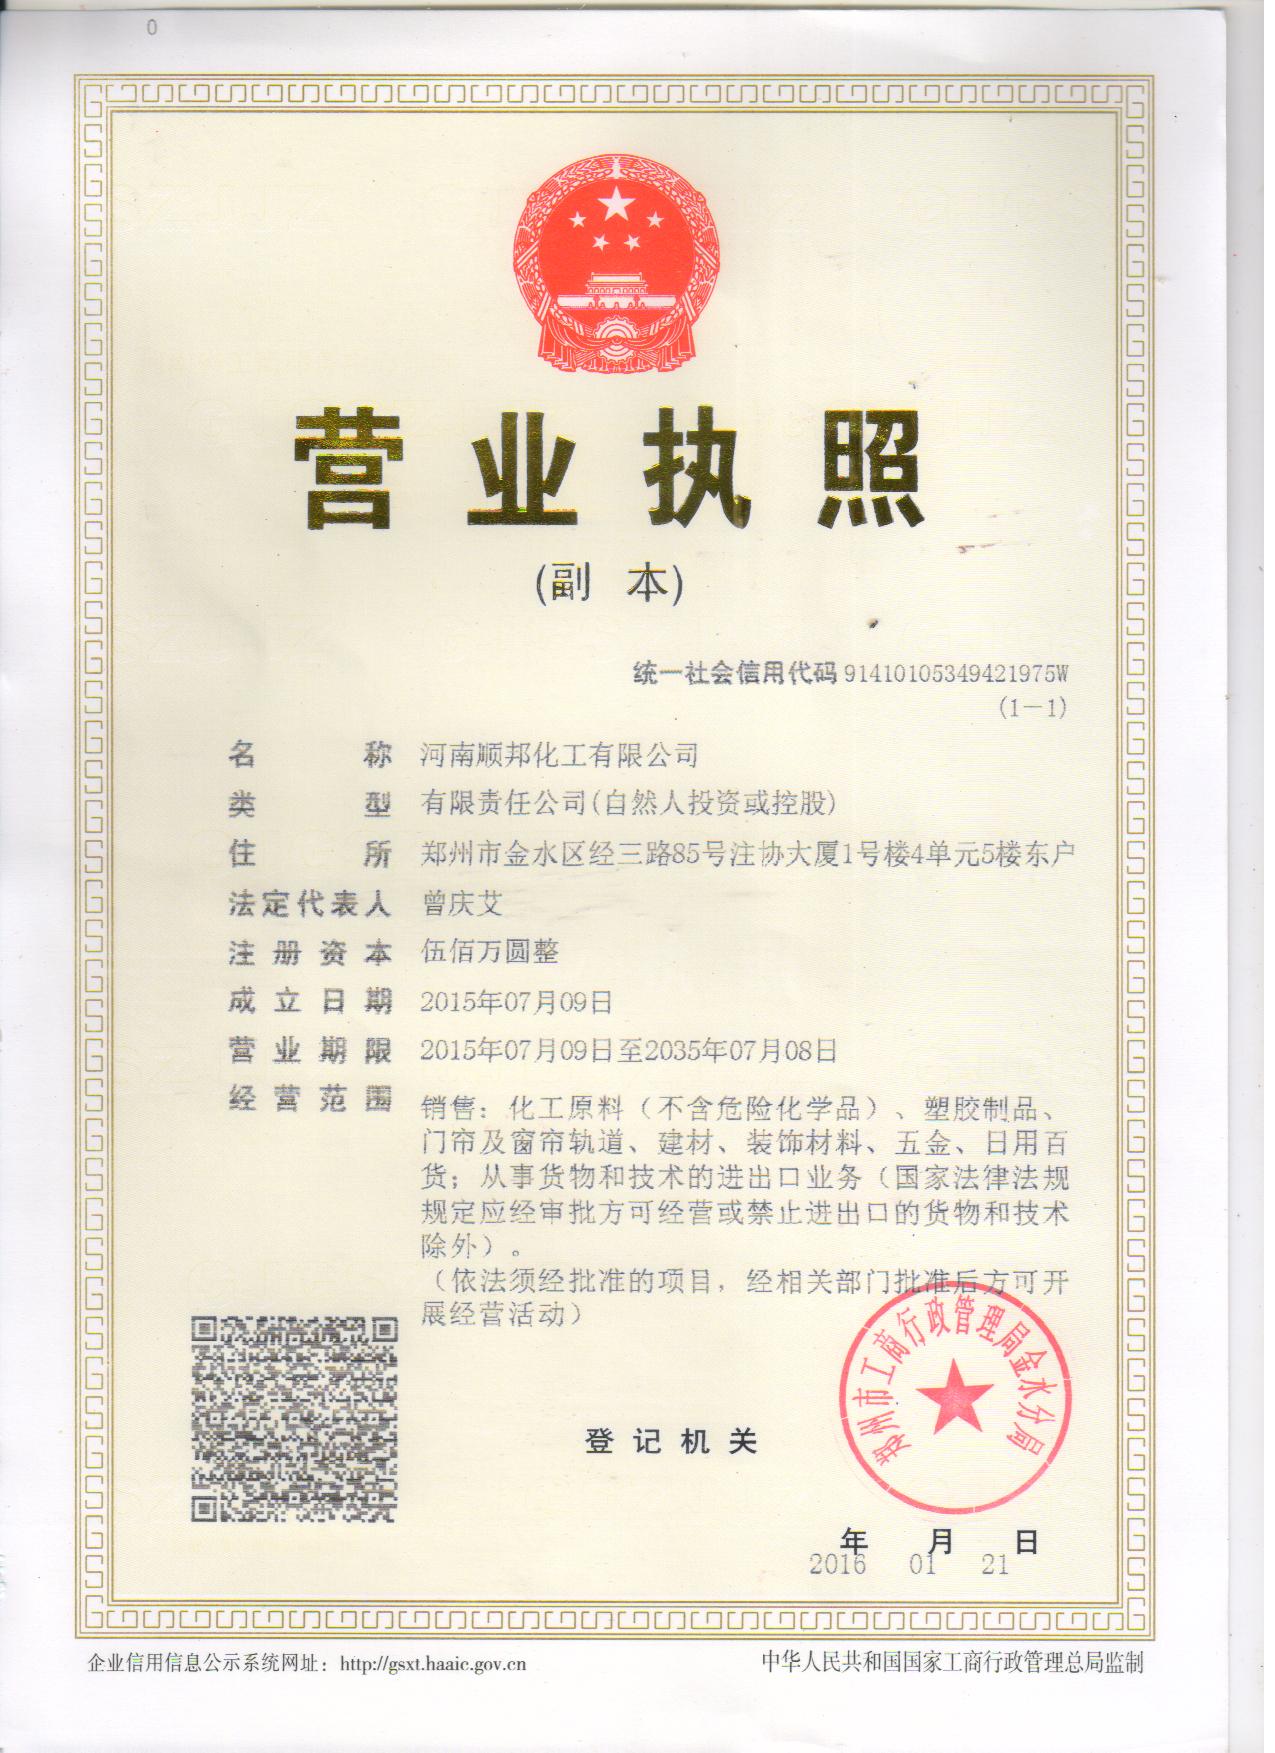 Henan Shunbang Chemical Co., Ltd